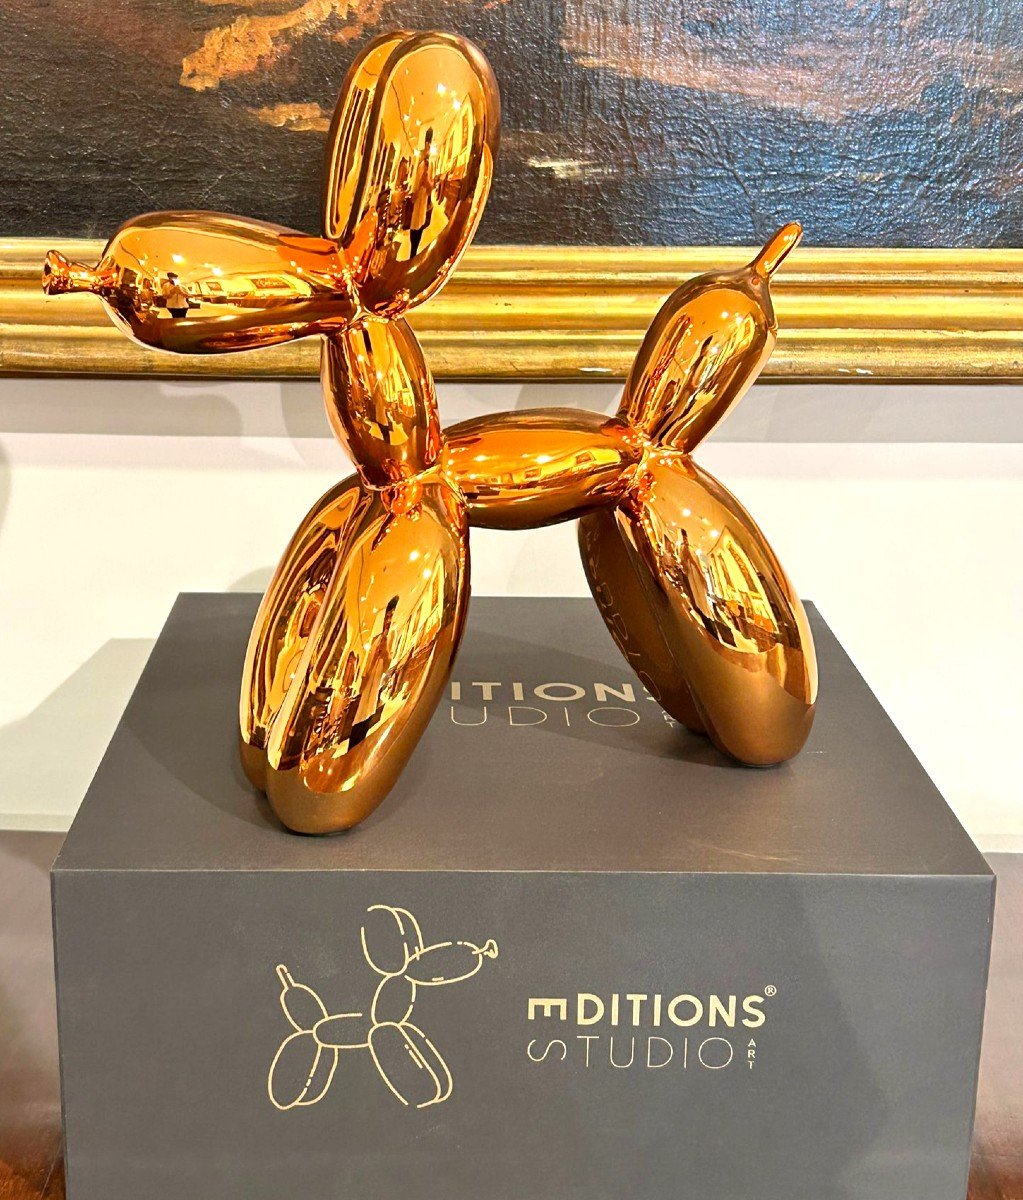 Jeef Koons - Ballon dog L orange gold (Editions Studio art)